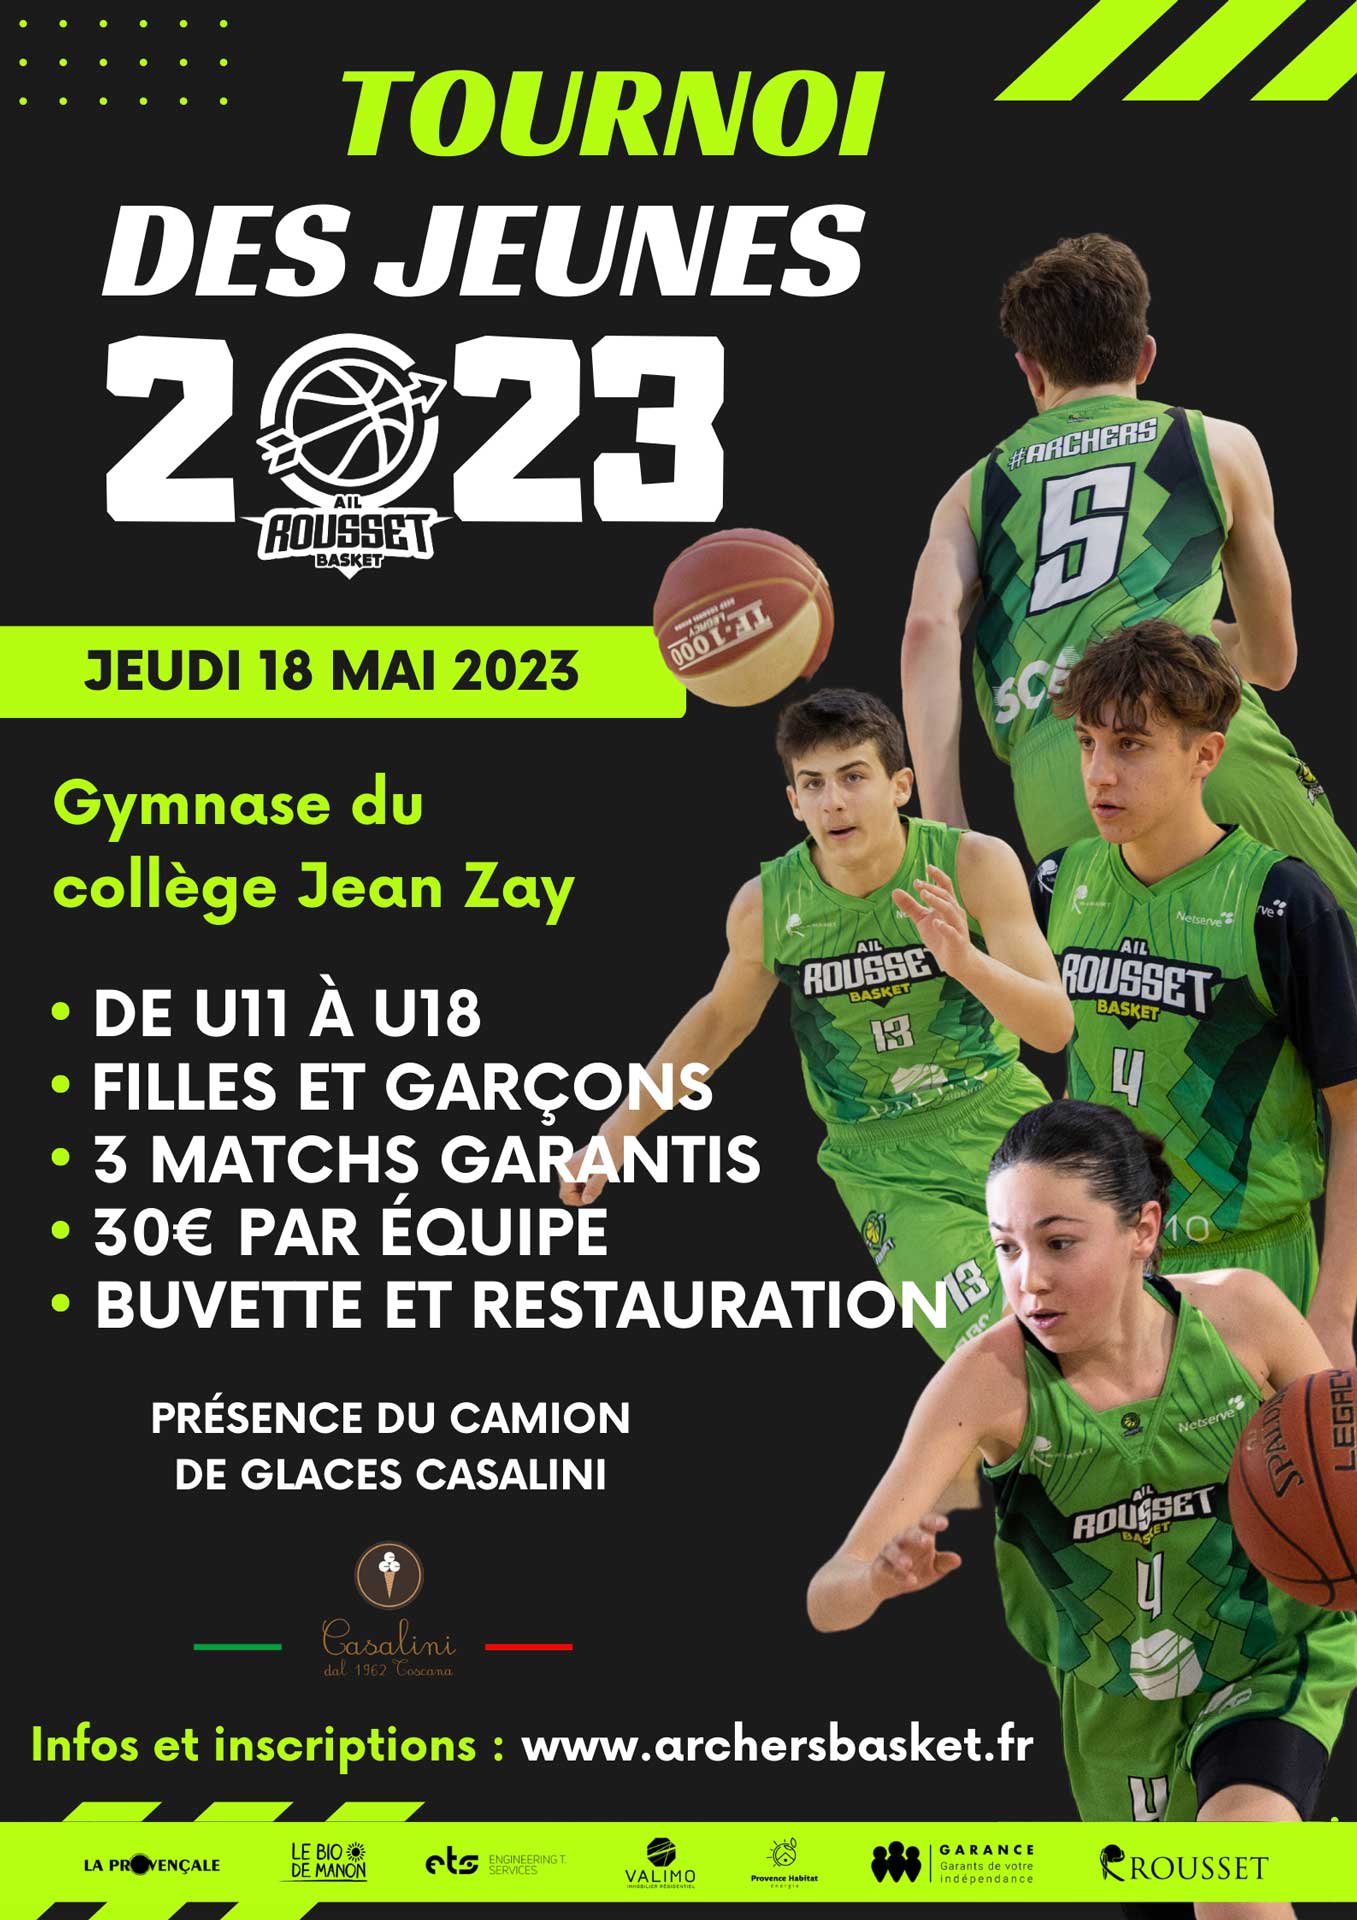 https://ail-rousset-basket.fr/wp-content/uploads/2023/03/TOURNOI-ROUSSET-2023.jpg